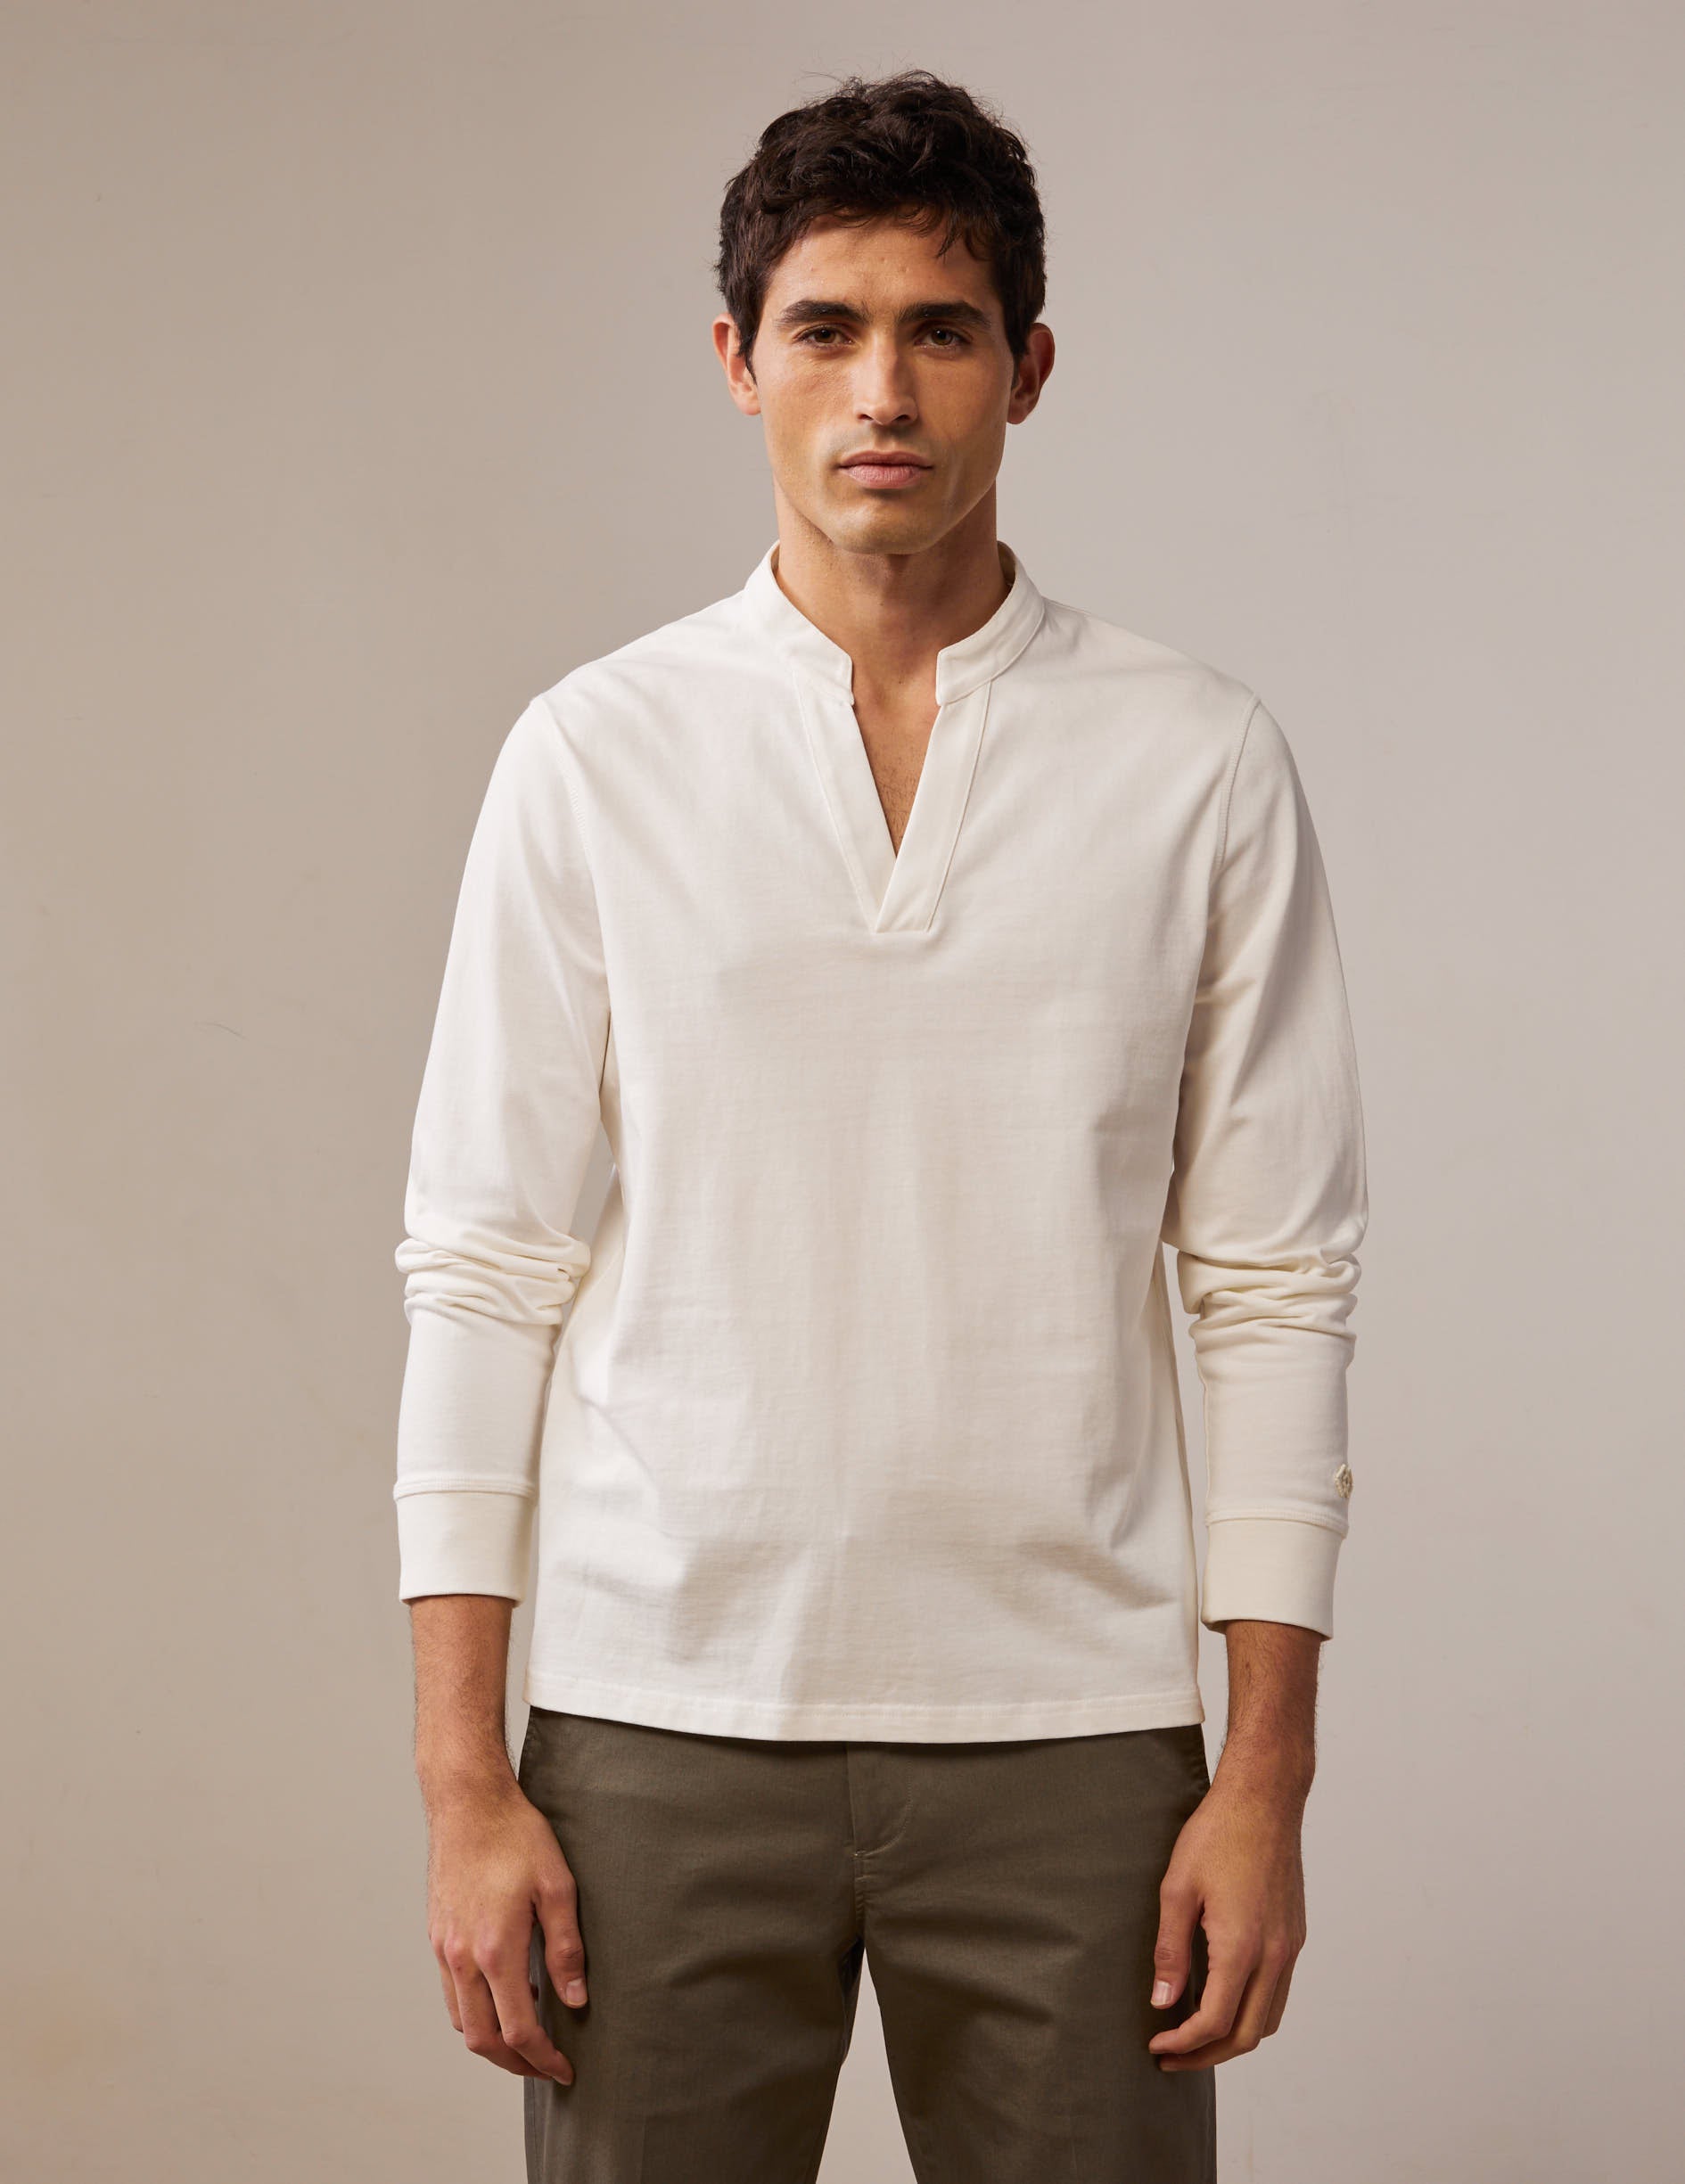 Charles T-shirt in ecru cotton